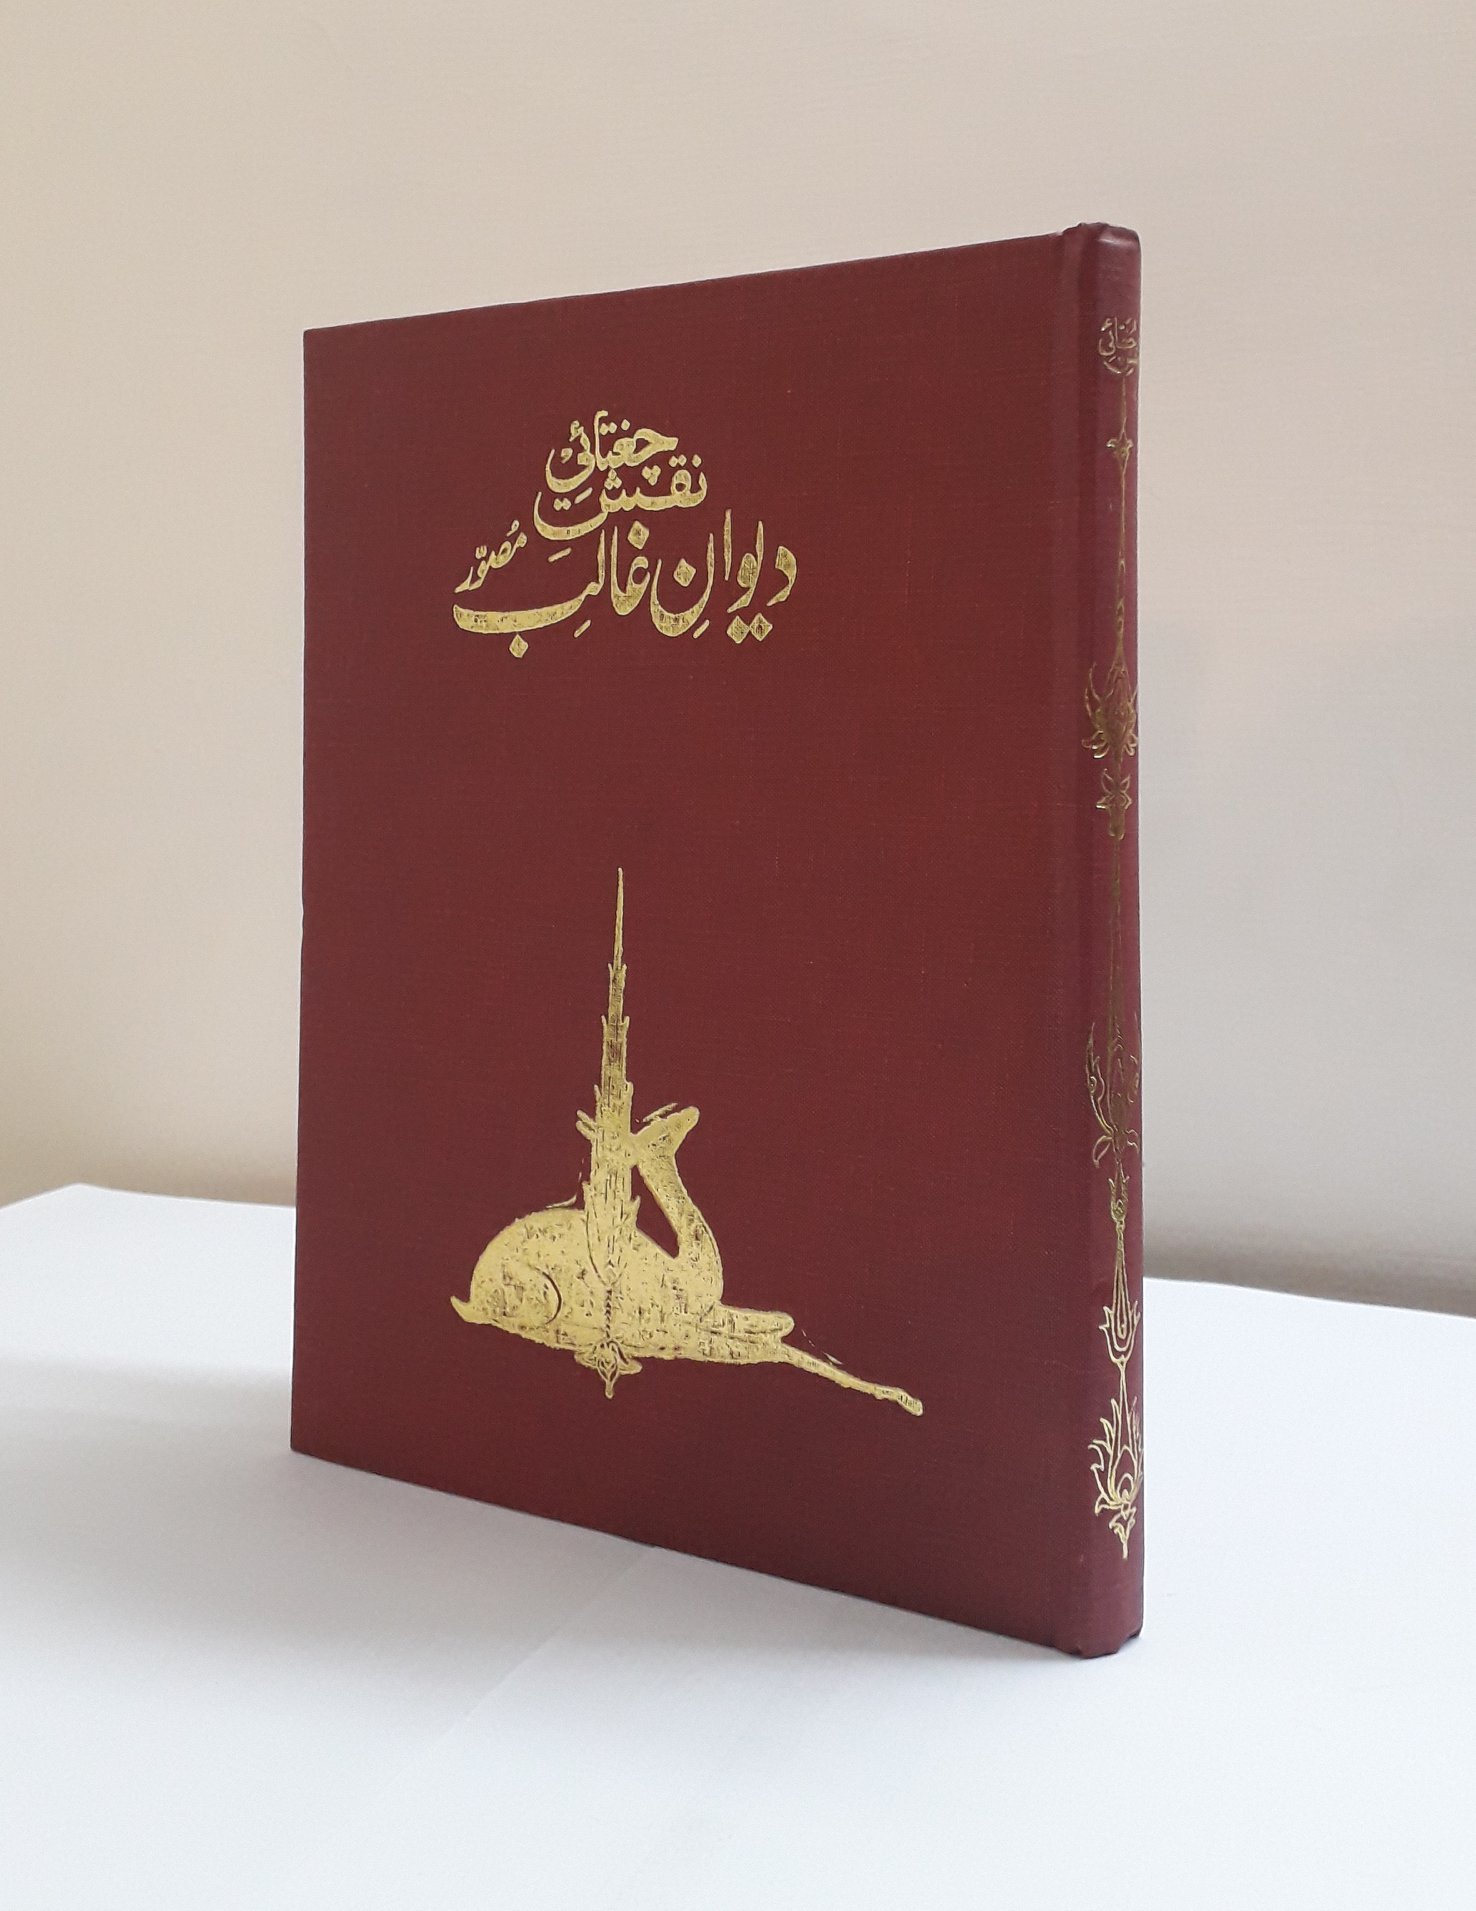 naqsh-i chughtai (1970s edition)